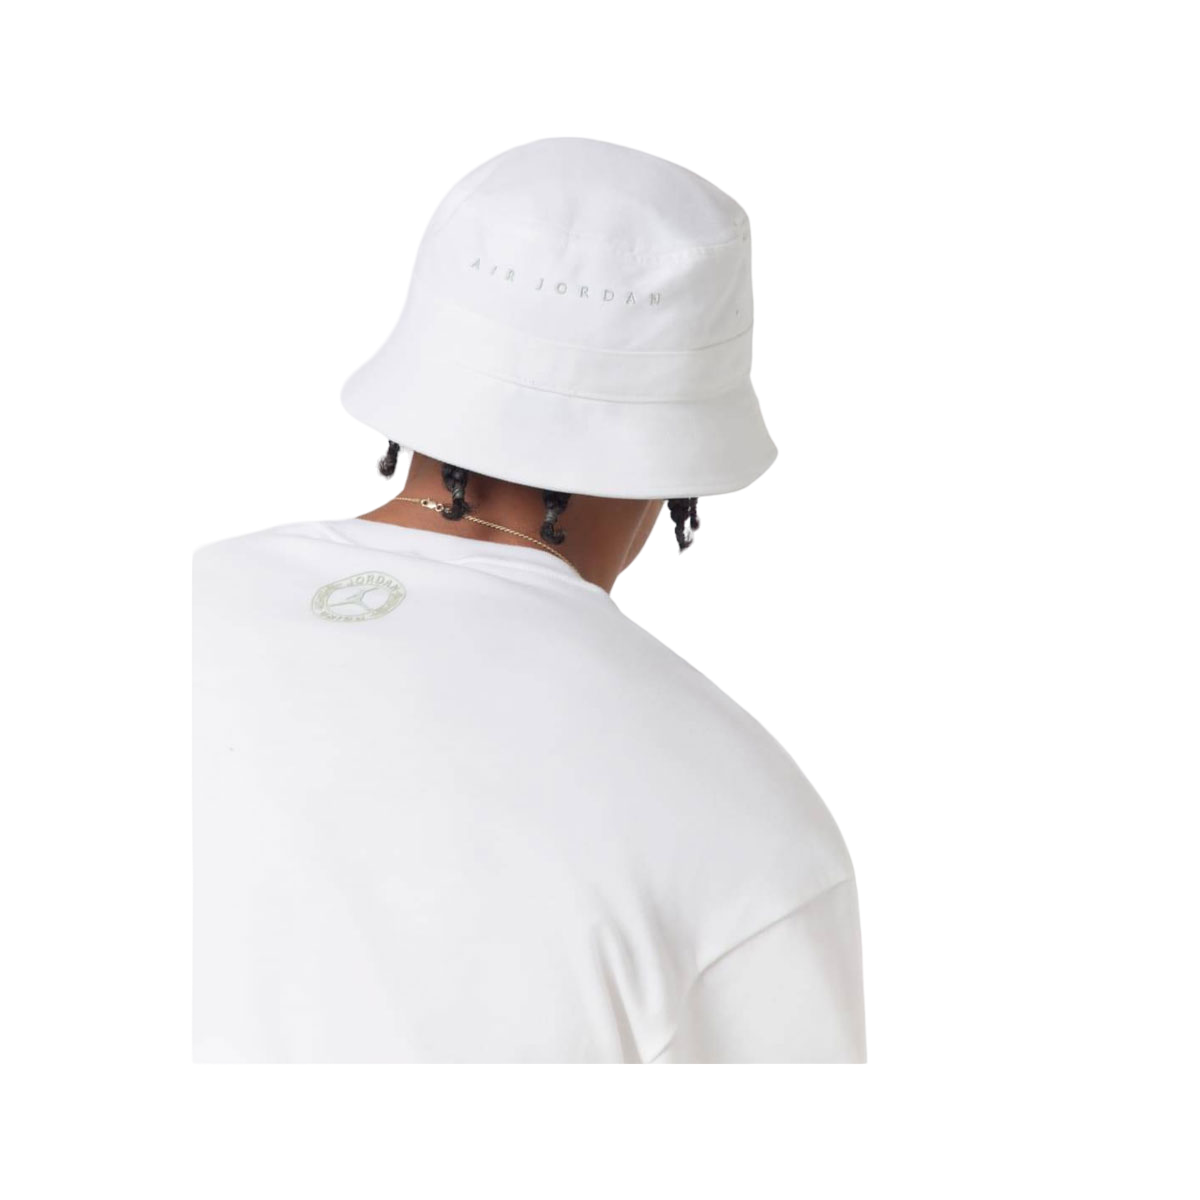 Air Jordan x Union Bucket Hat in White